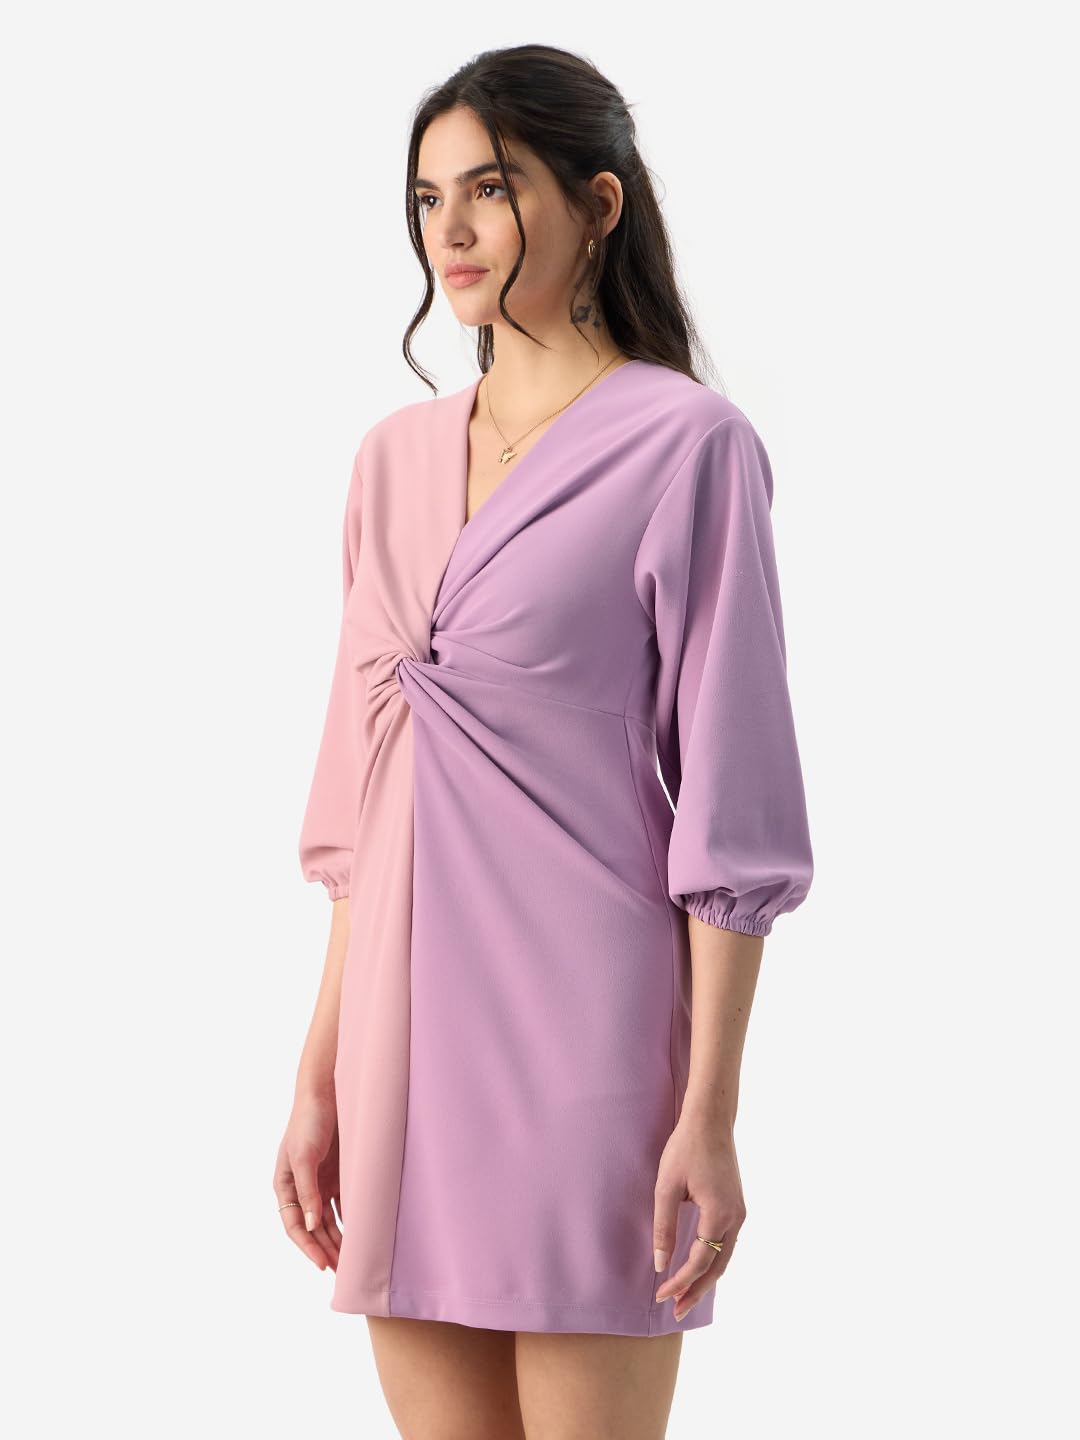 Women's Colorblock Modal Button-Down Nightshirt